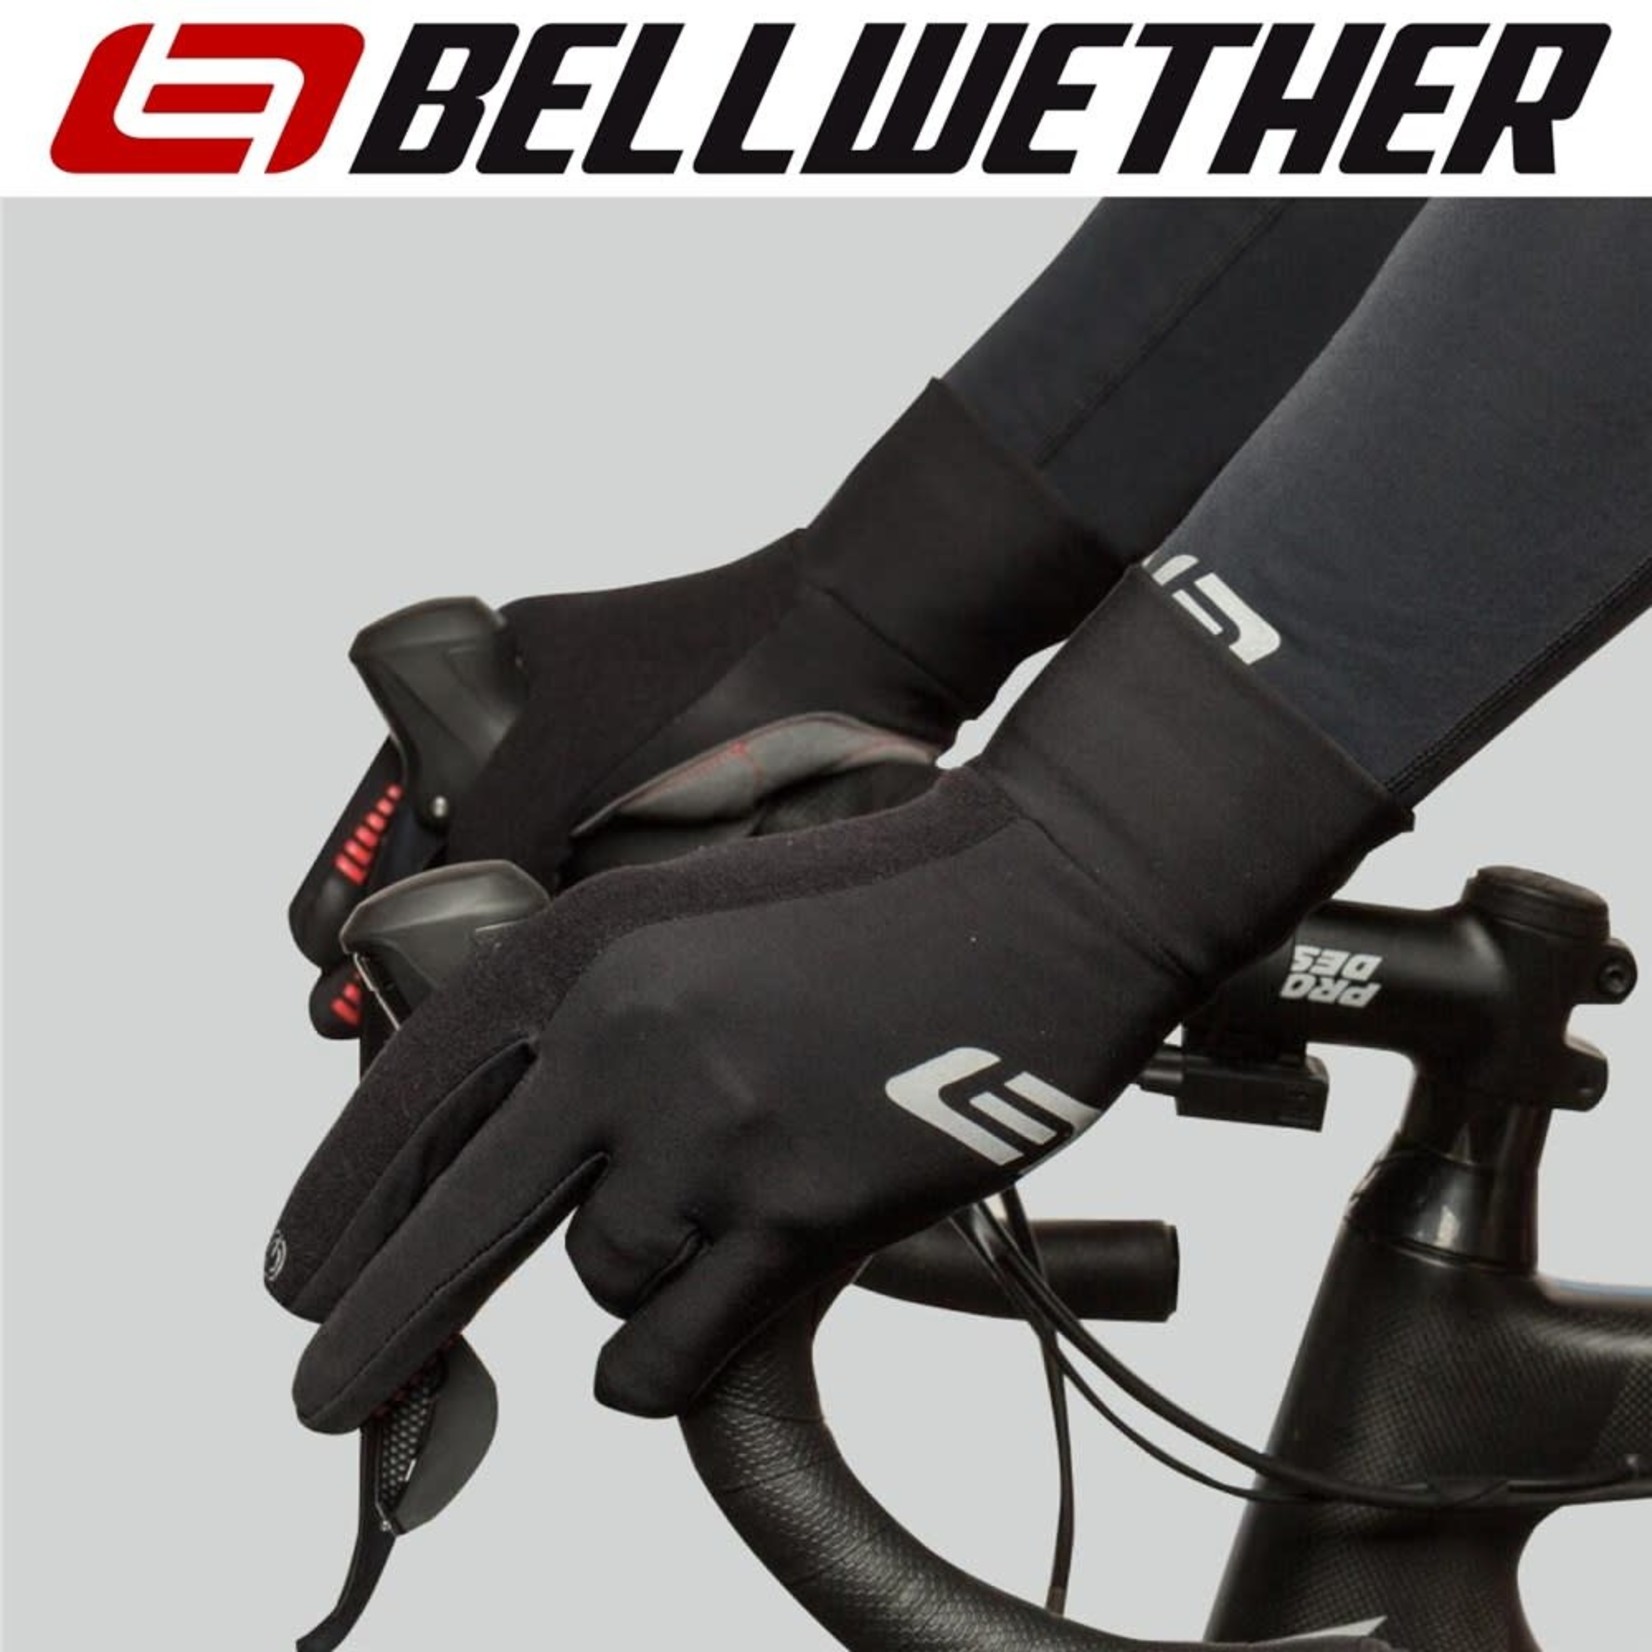 Bellwether Bellwether Climate Control Black Gloves